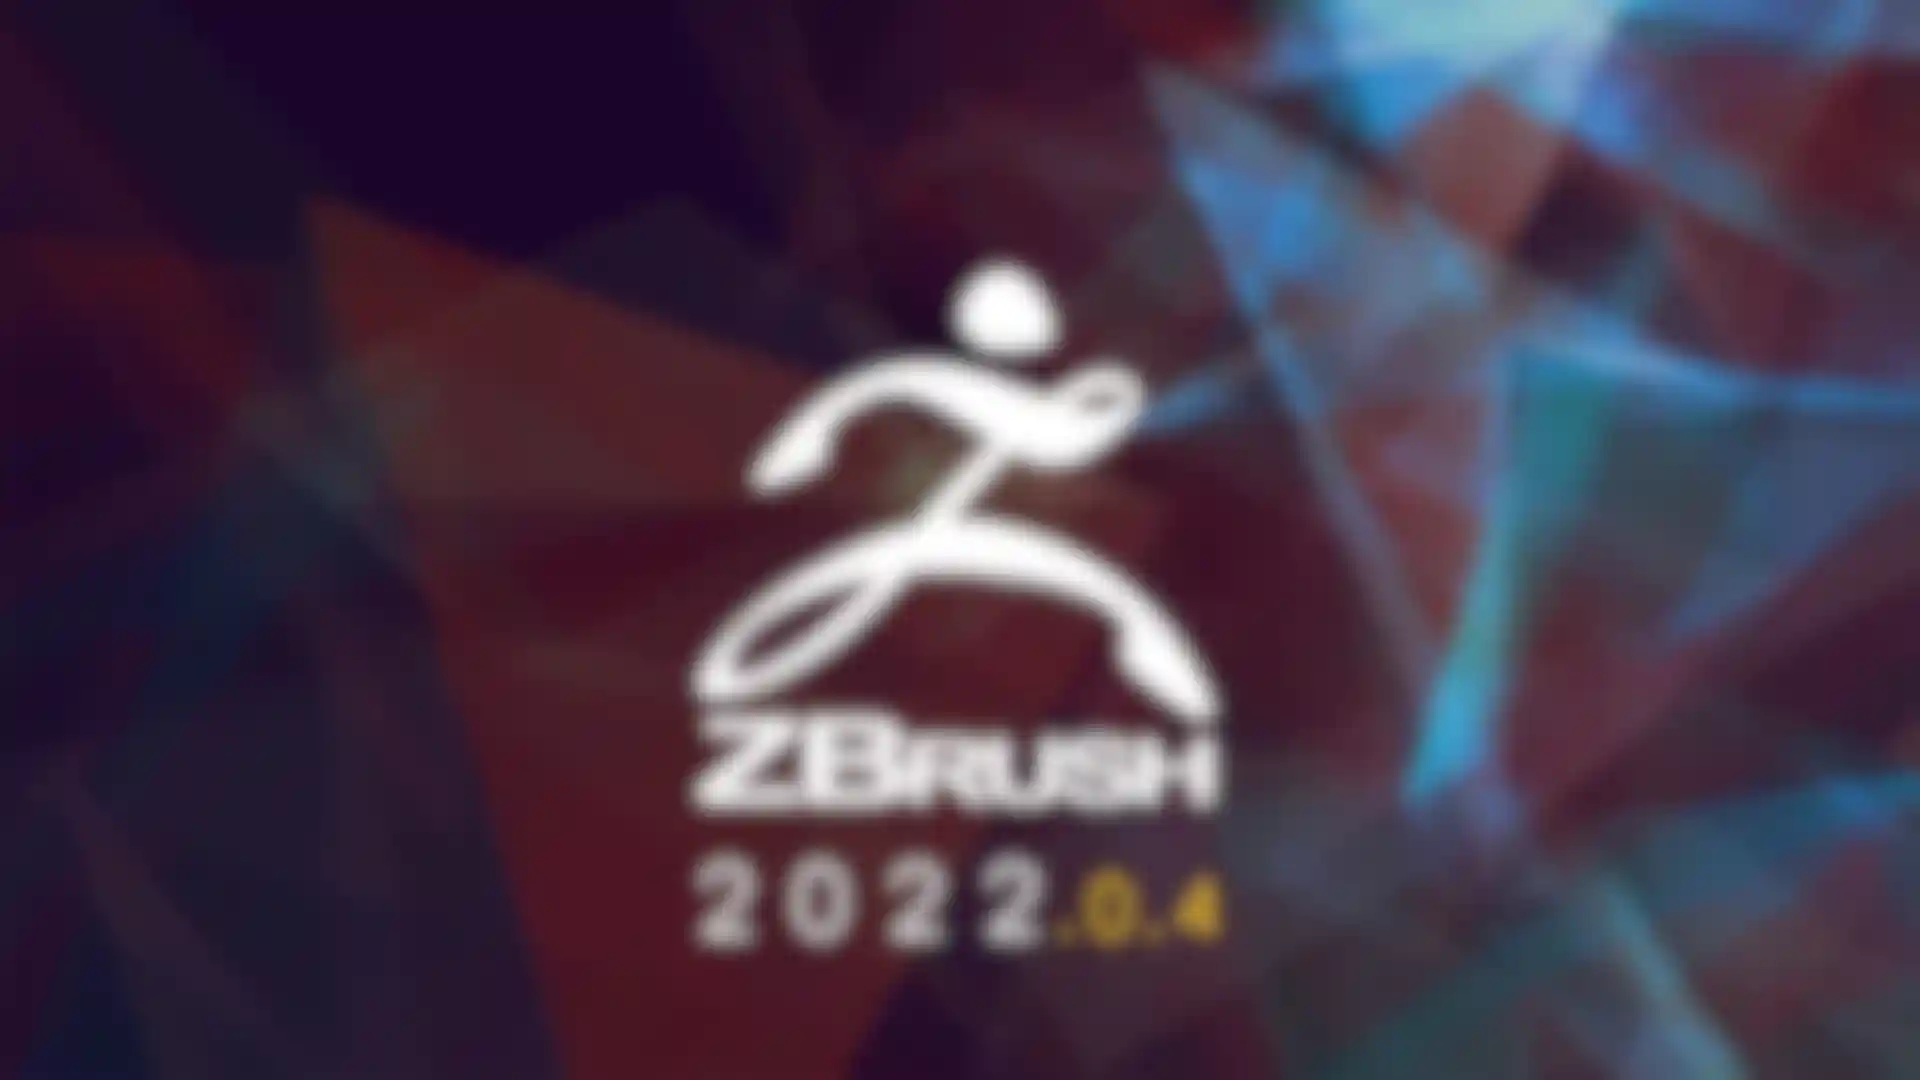 ZBrush 2022.0.4 jetzt verfügbar! image